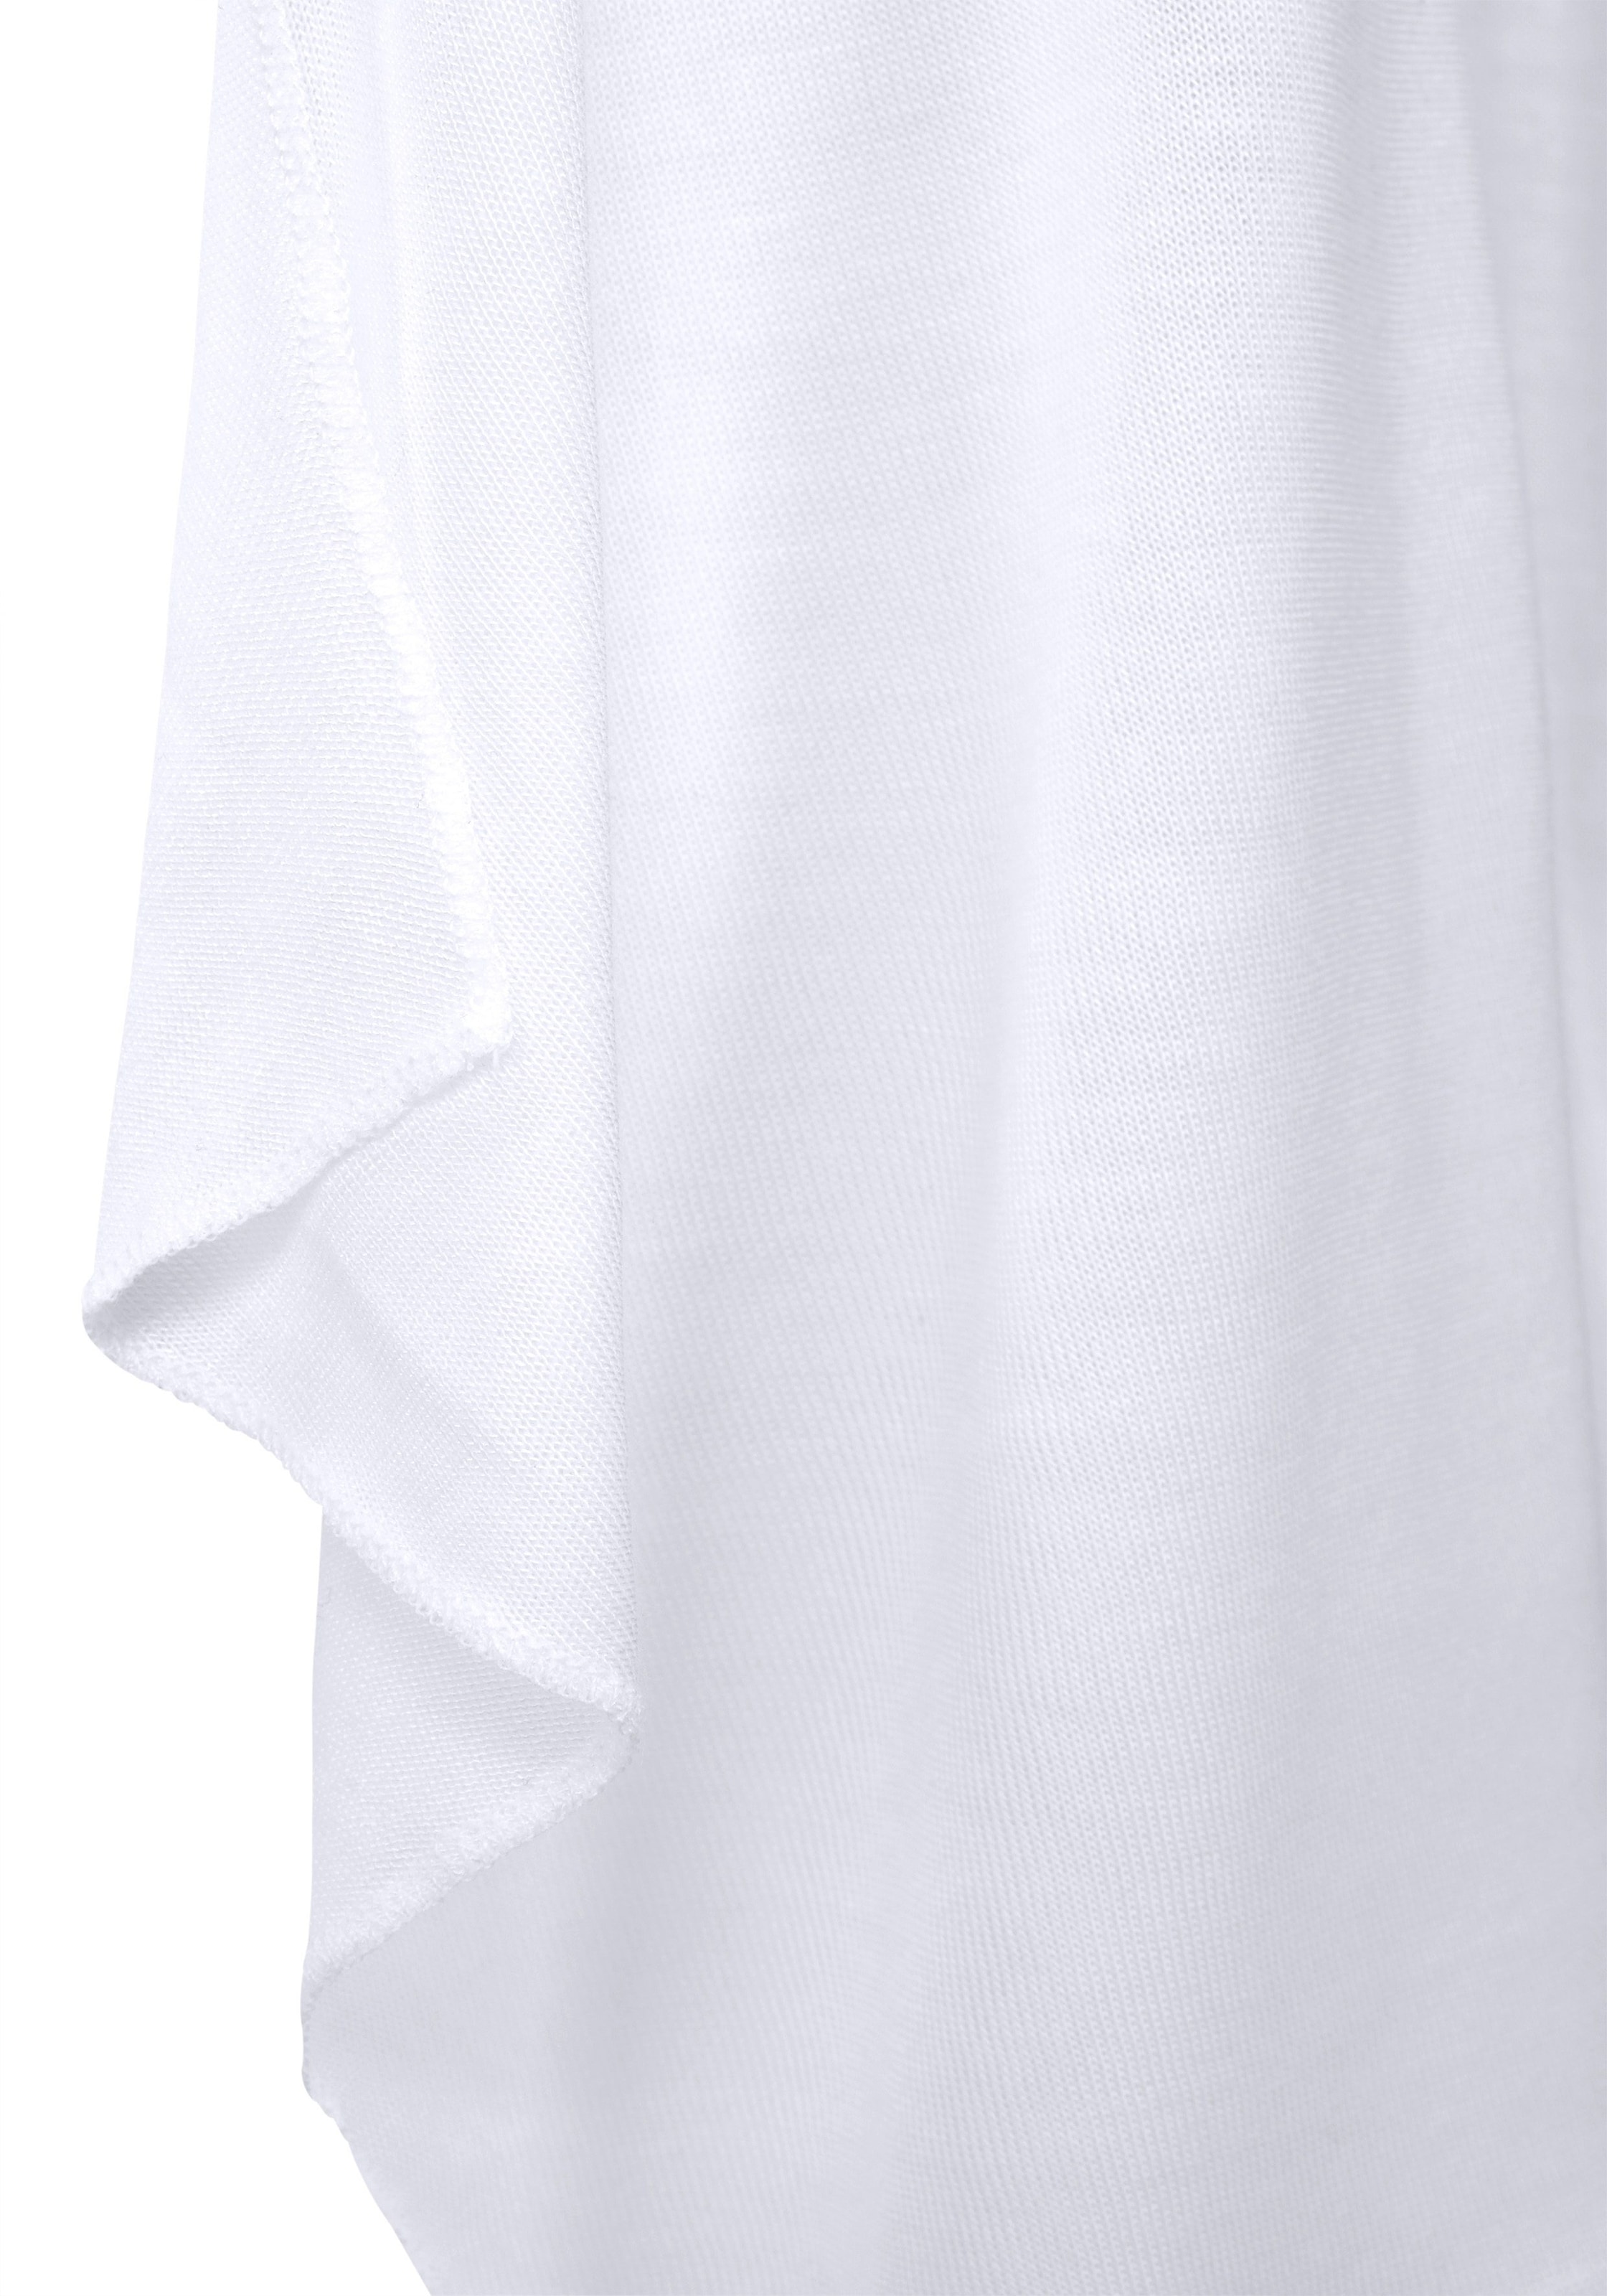 LASCANA Shirtjacke, Cardigan online kaufen » & | Bademode, in Jersey, Strickjacke Unterwäsche aus Form, LASCANA Lingerie offener Sommerjacke